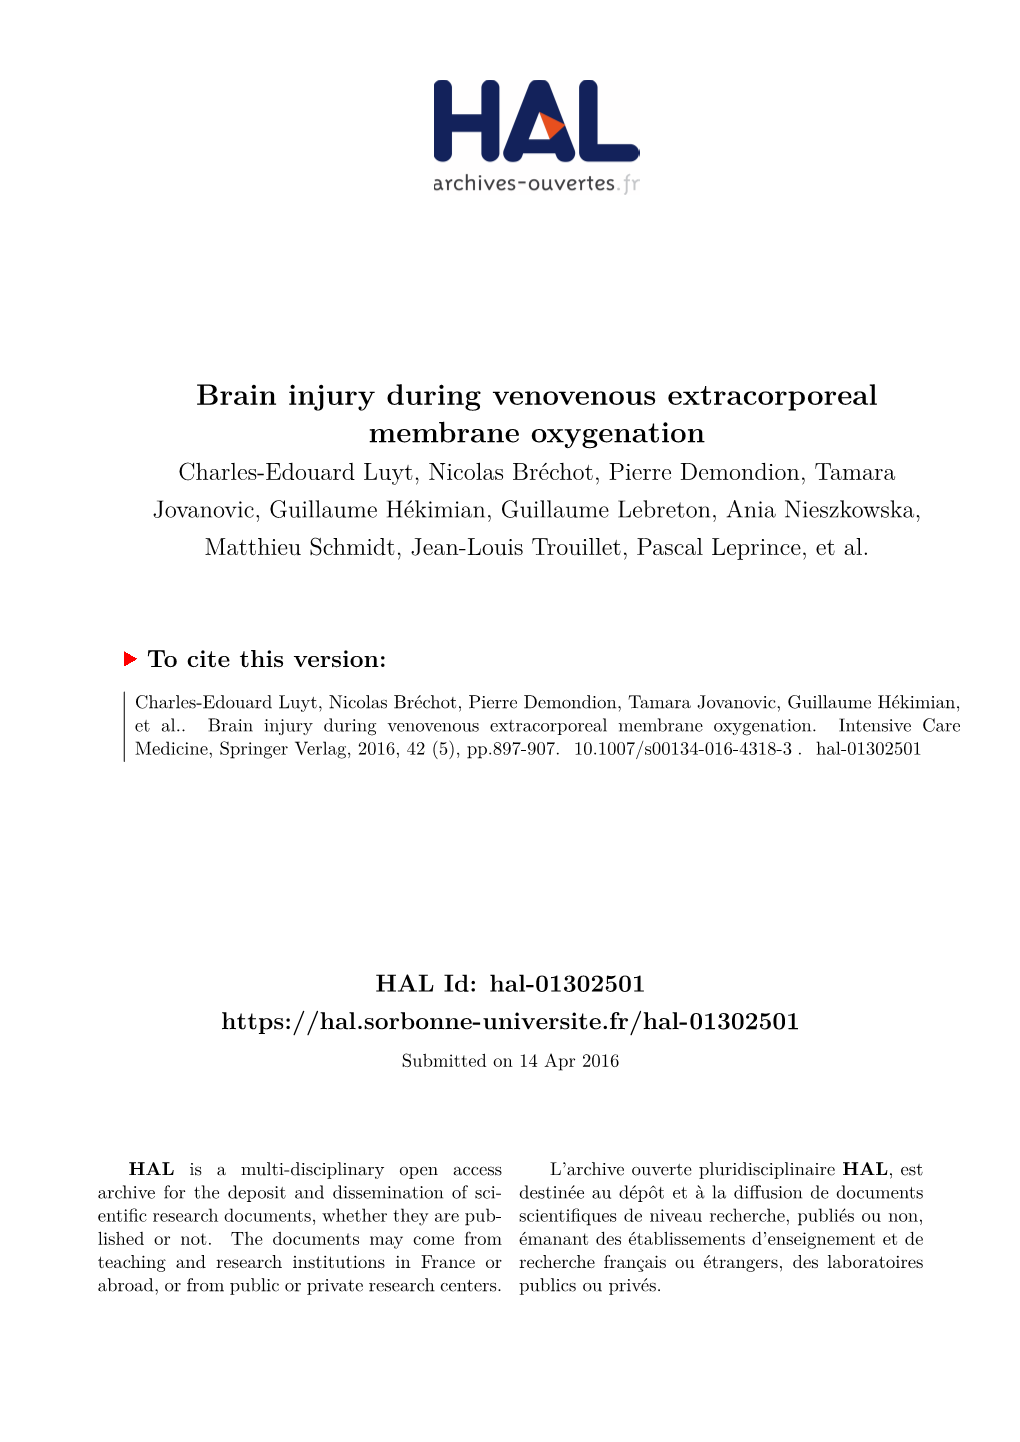 Brain Injury During Venovenous Extracorporeal Membrane